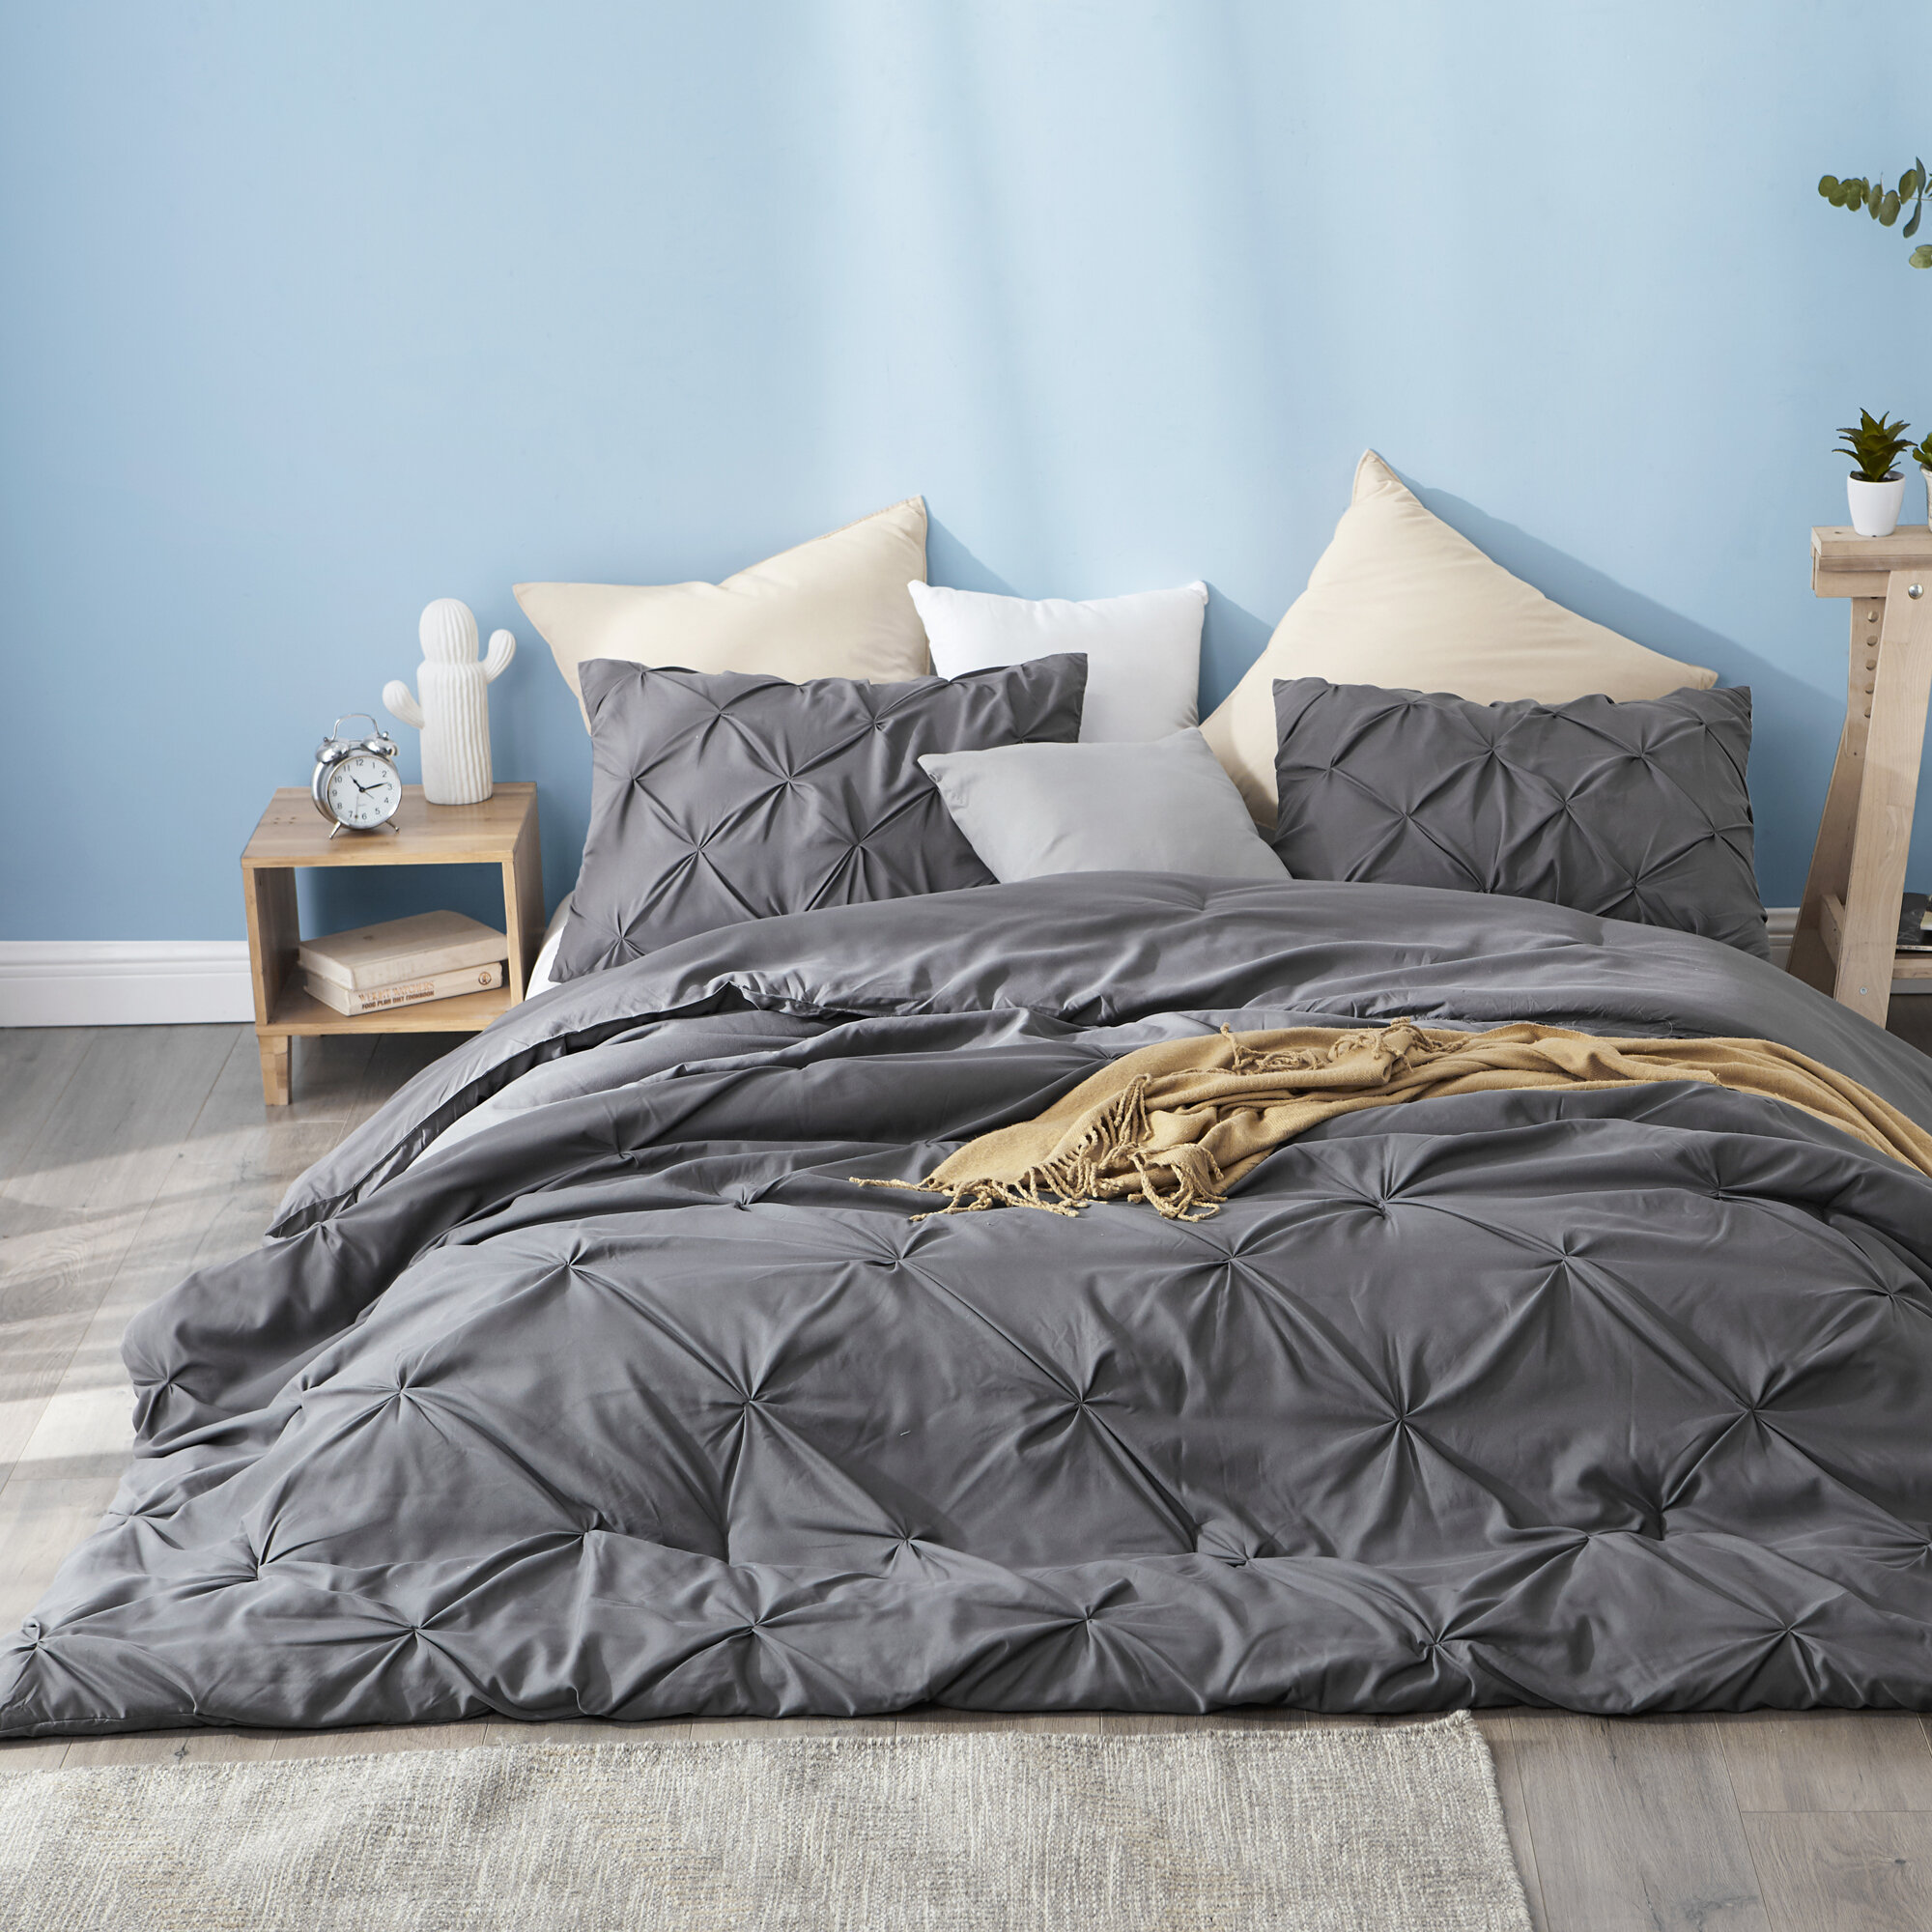 Mercer41 Largent Comforter Set Reviews Wayfair,Accent Walls 2020